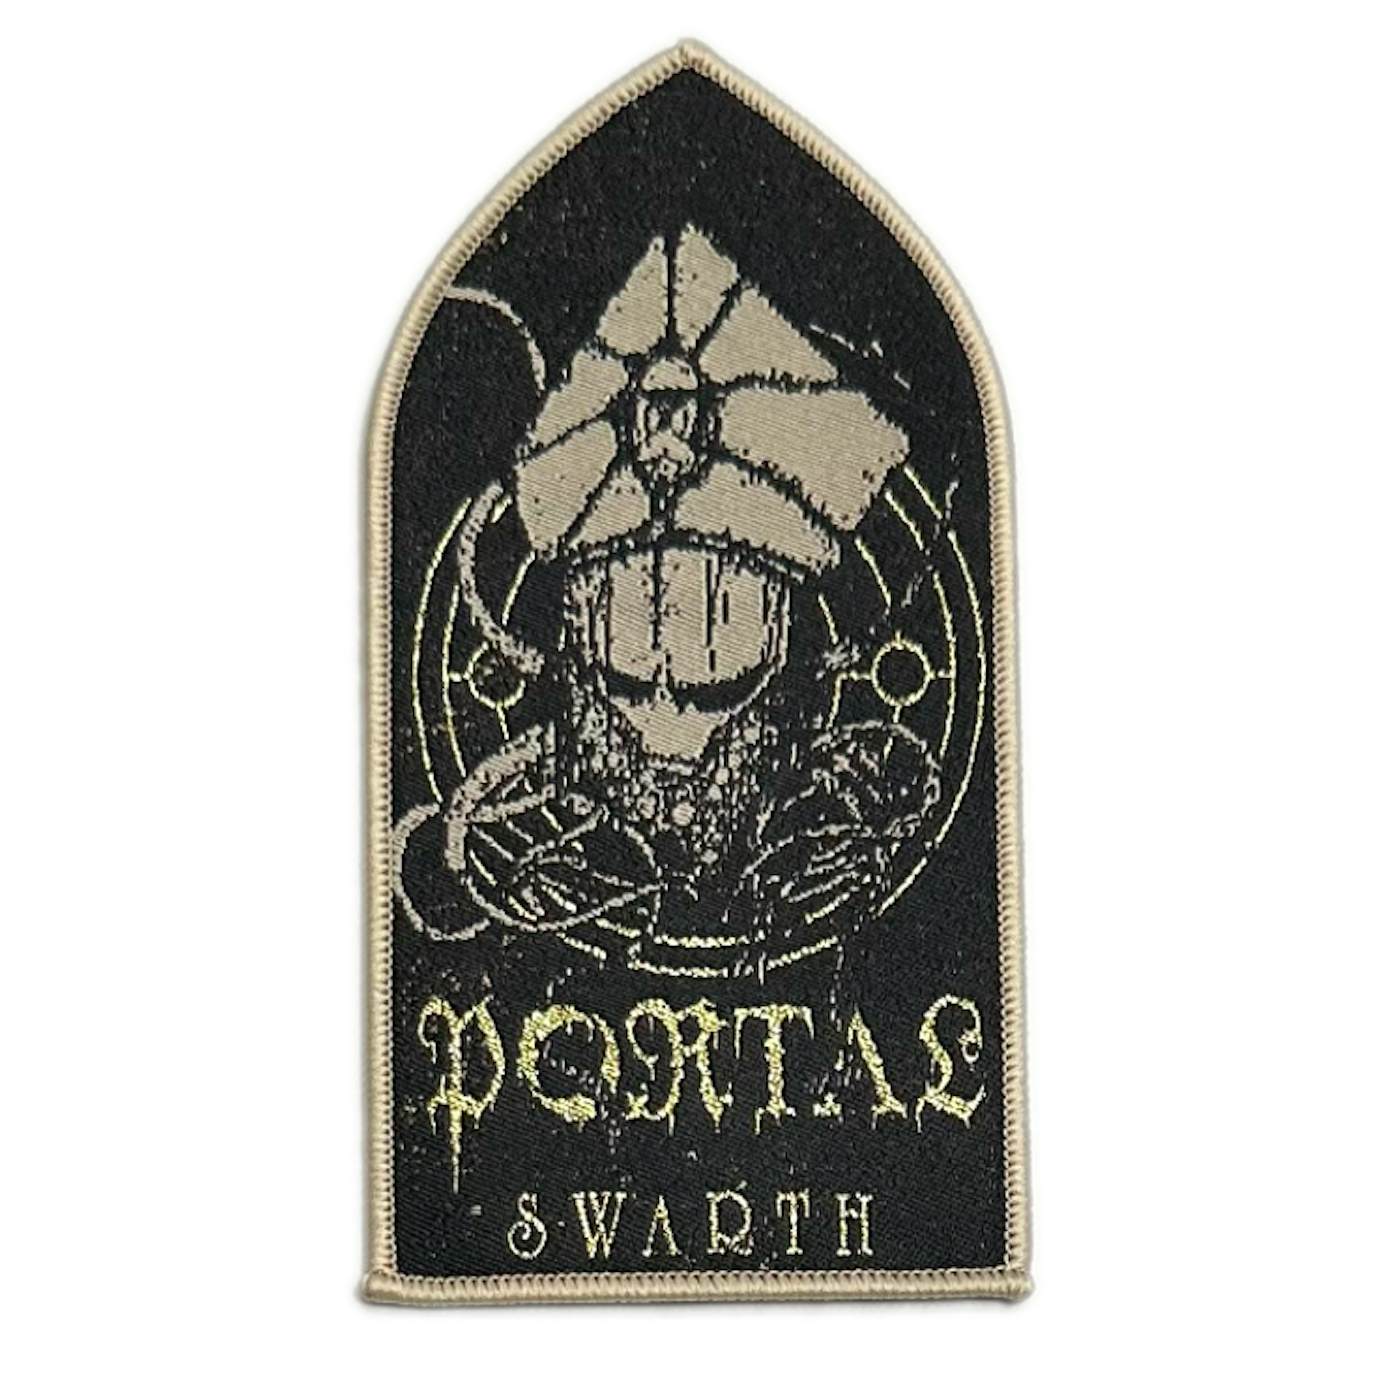 PORTAL - 'Swarth (Brown)' Patch